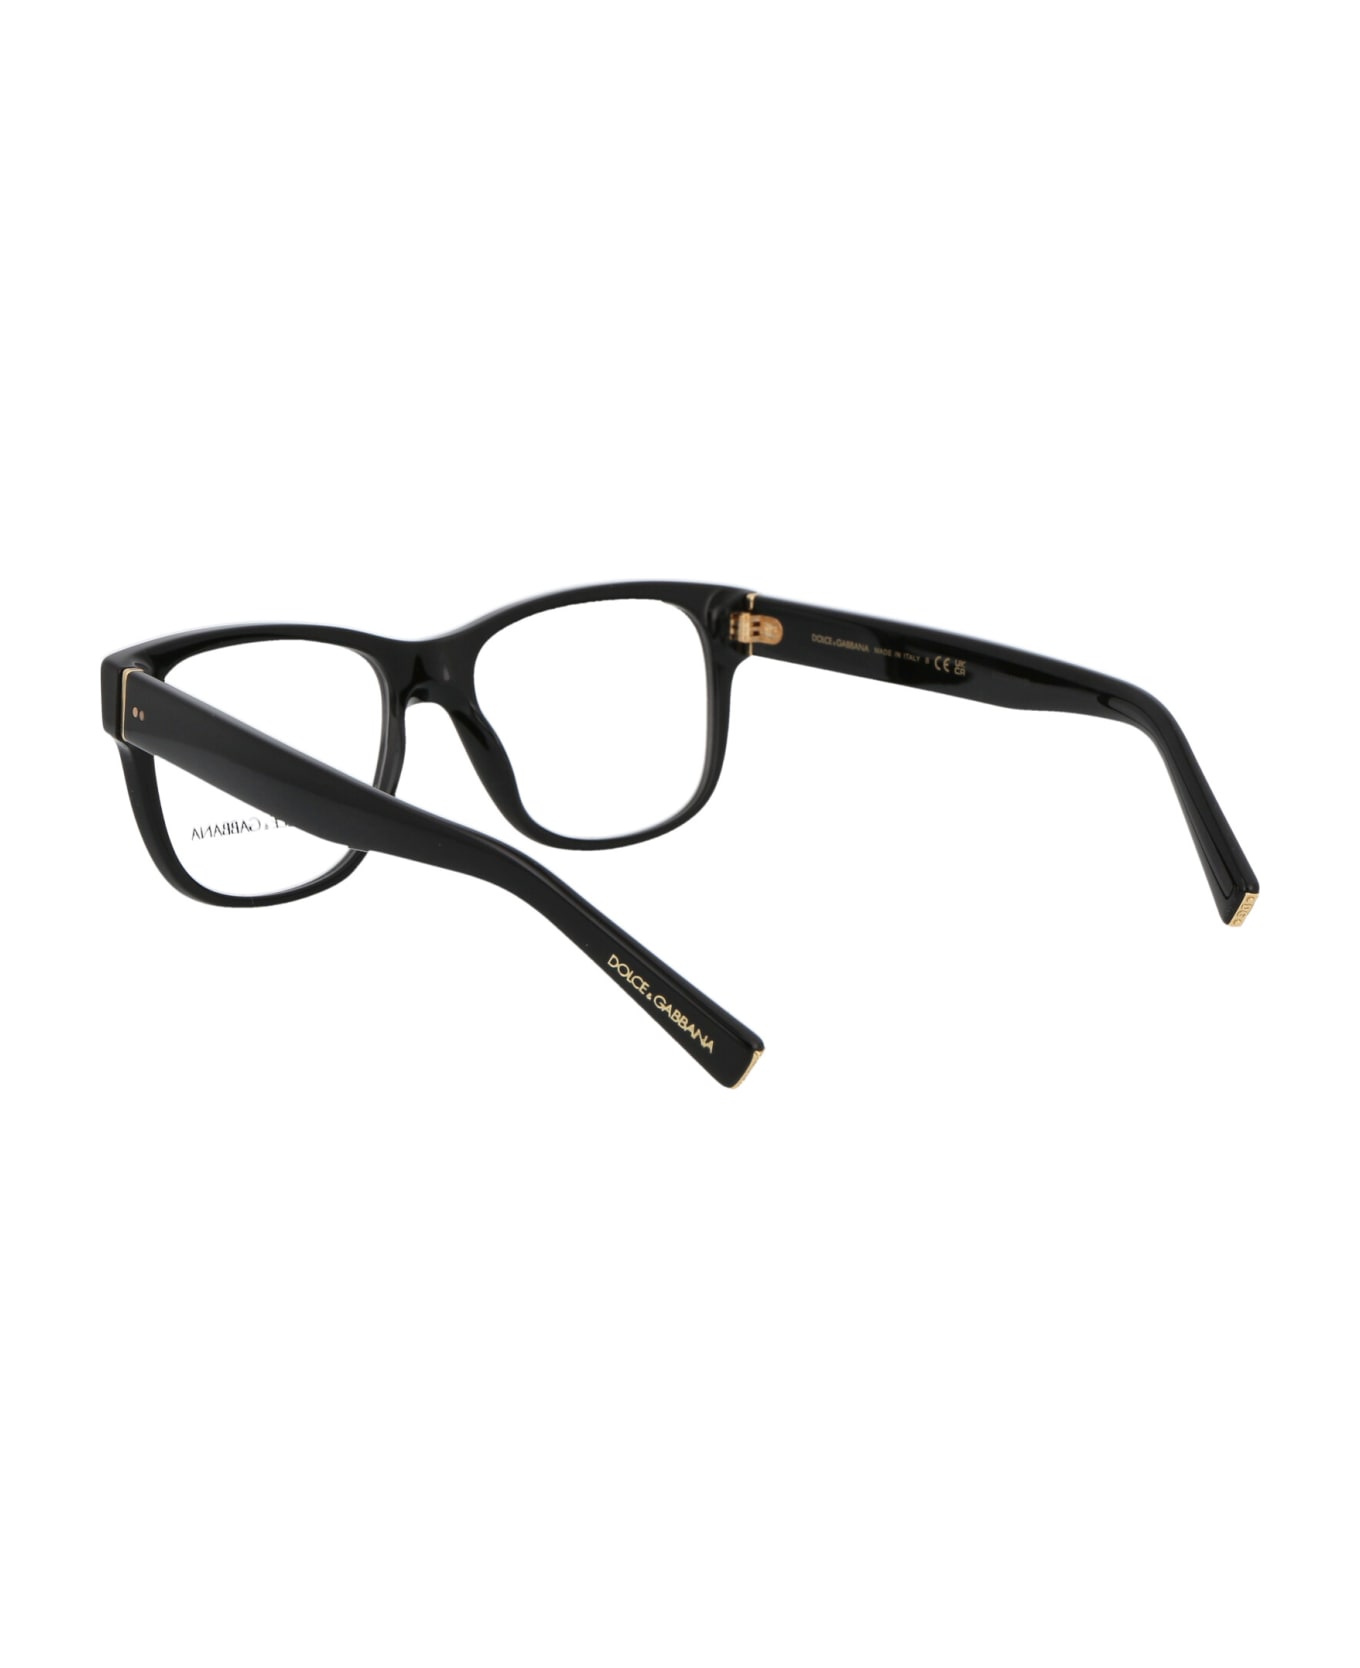 Dolce & Gabbana Eyewear 0dg3305 Glasses - 501 BLACK